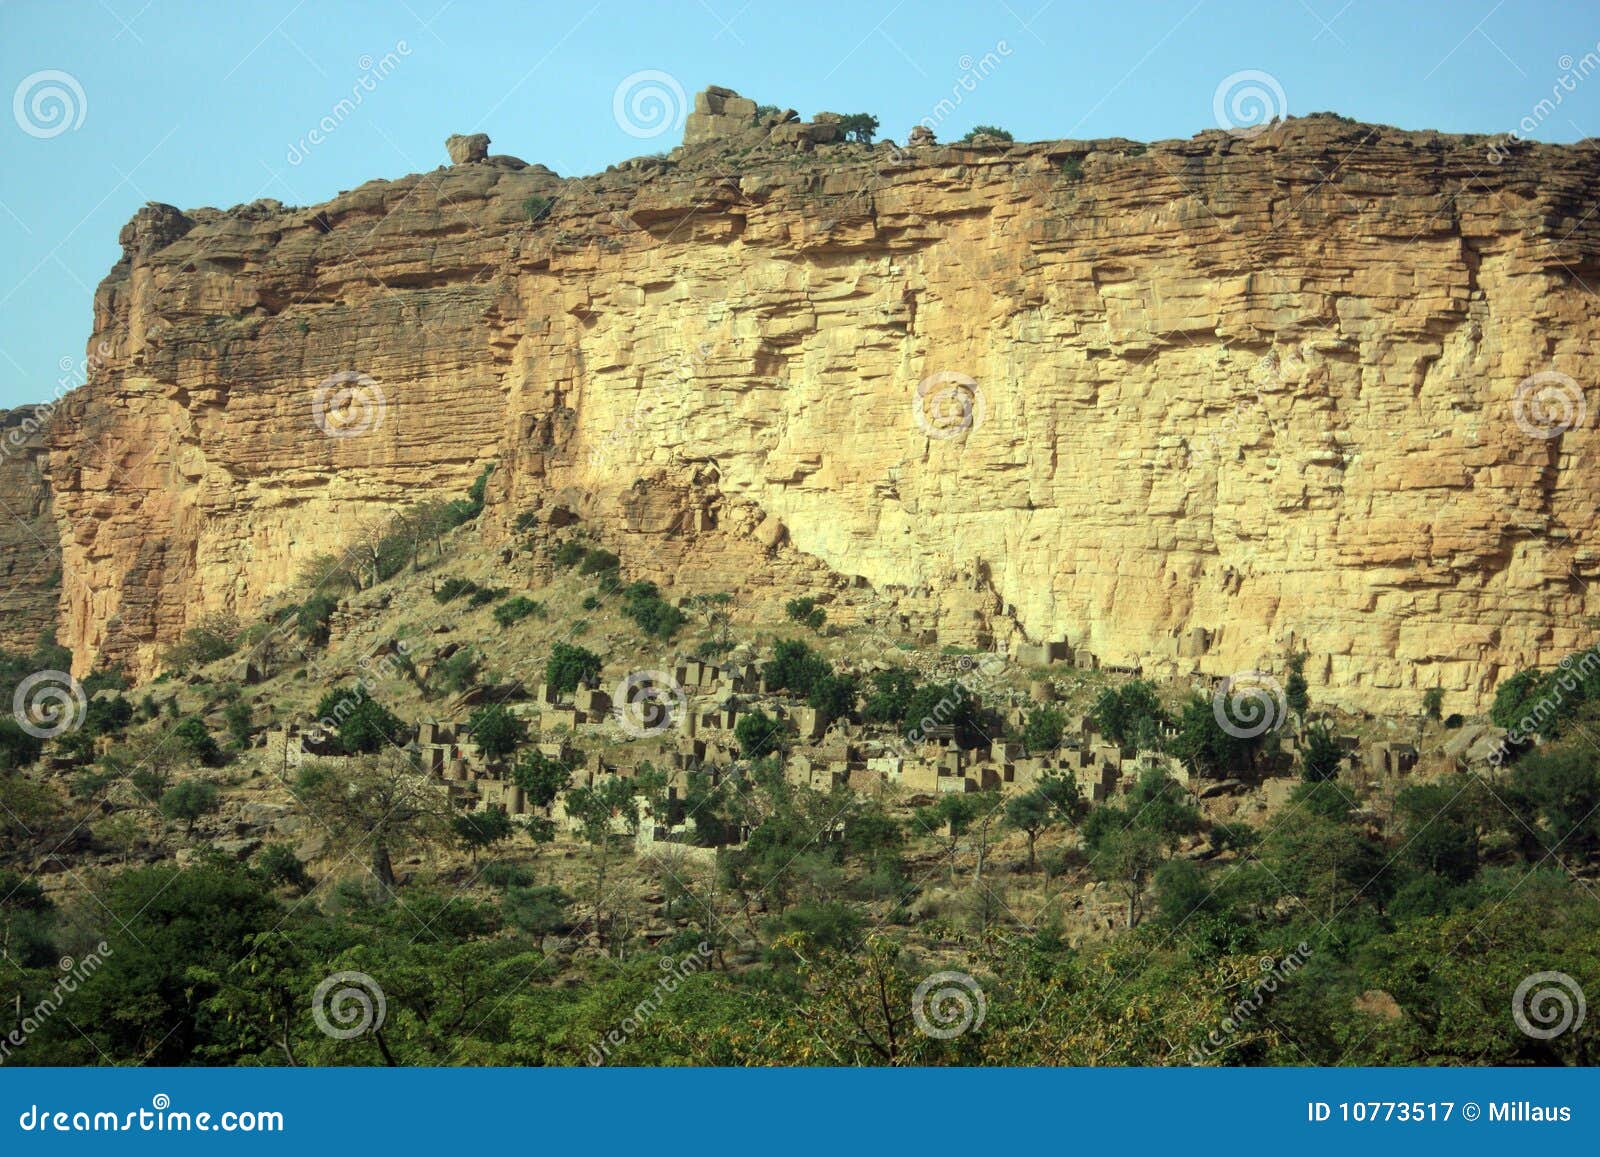 bandiagara escarpment